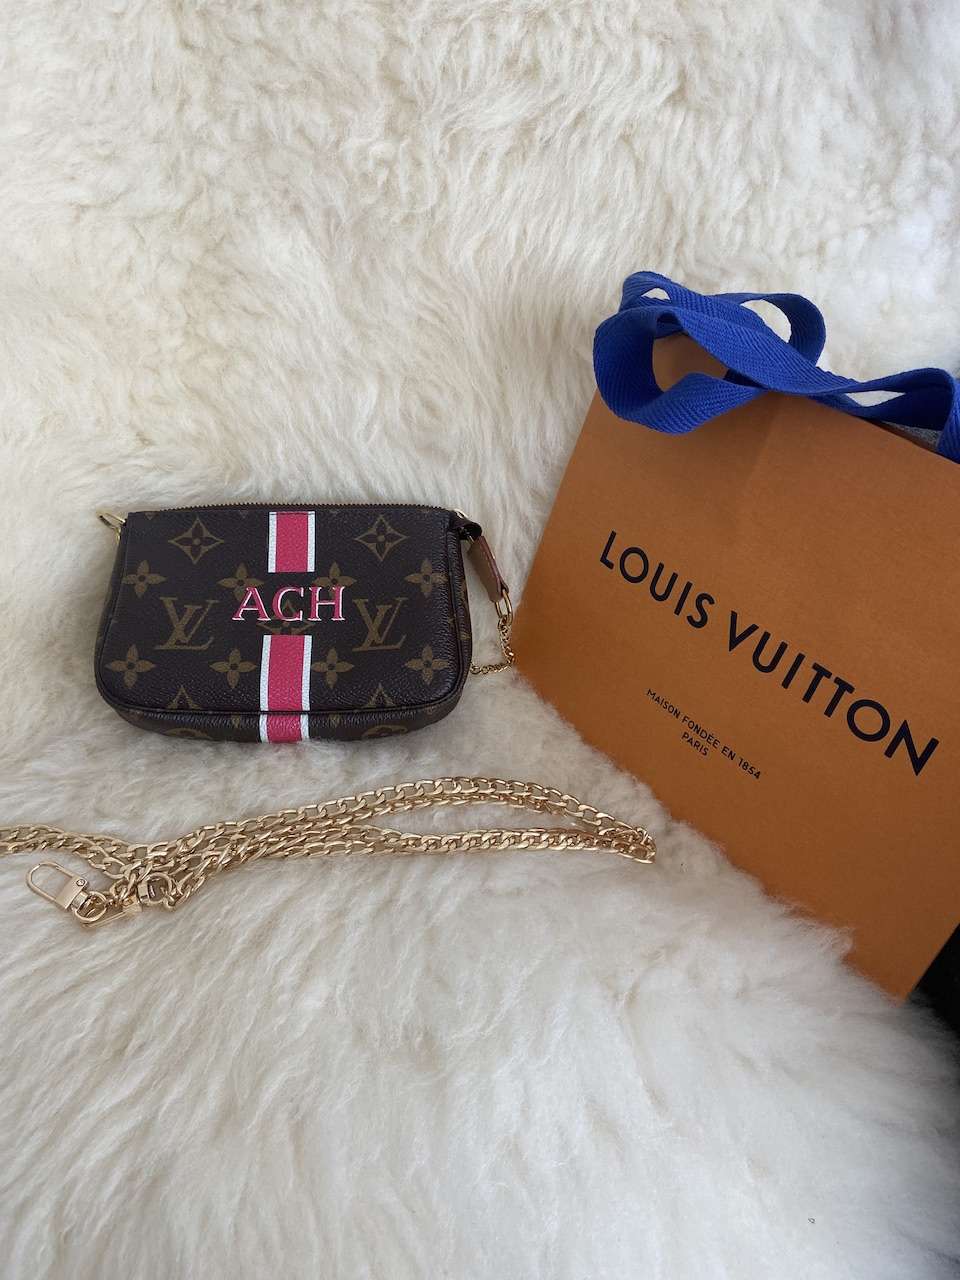 Louis Vuitton mini pochette